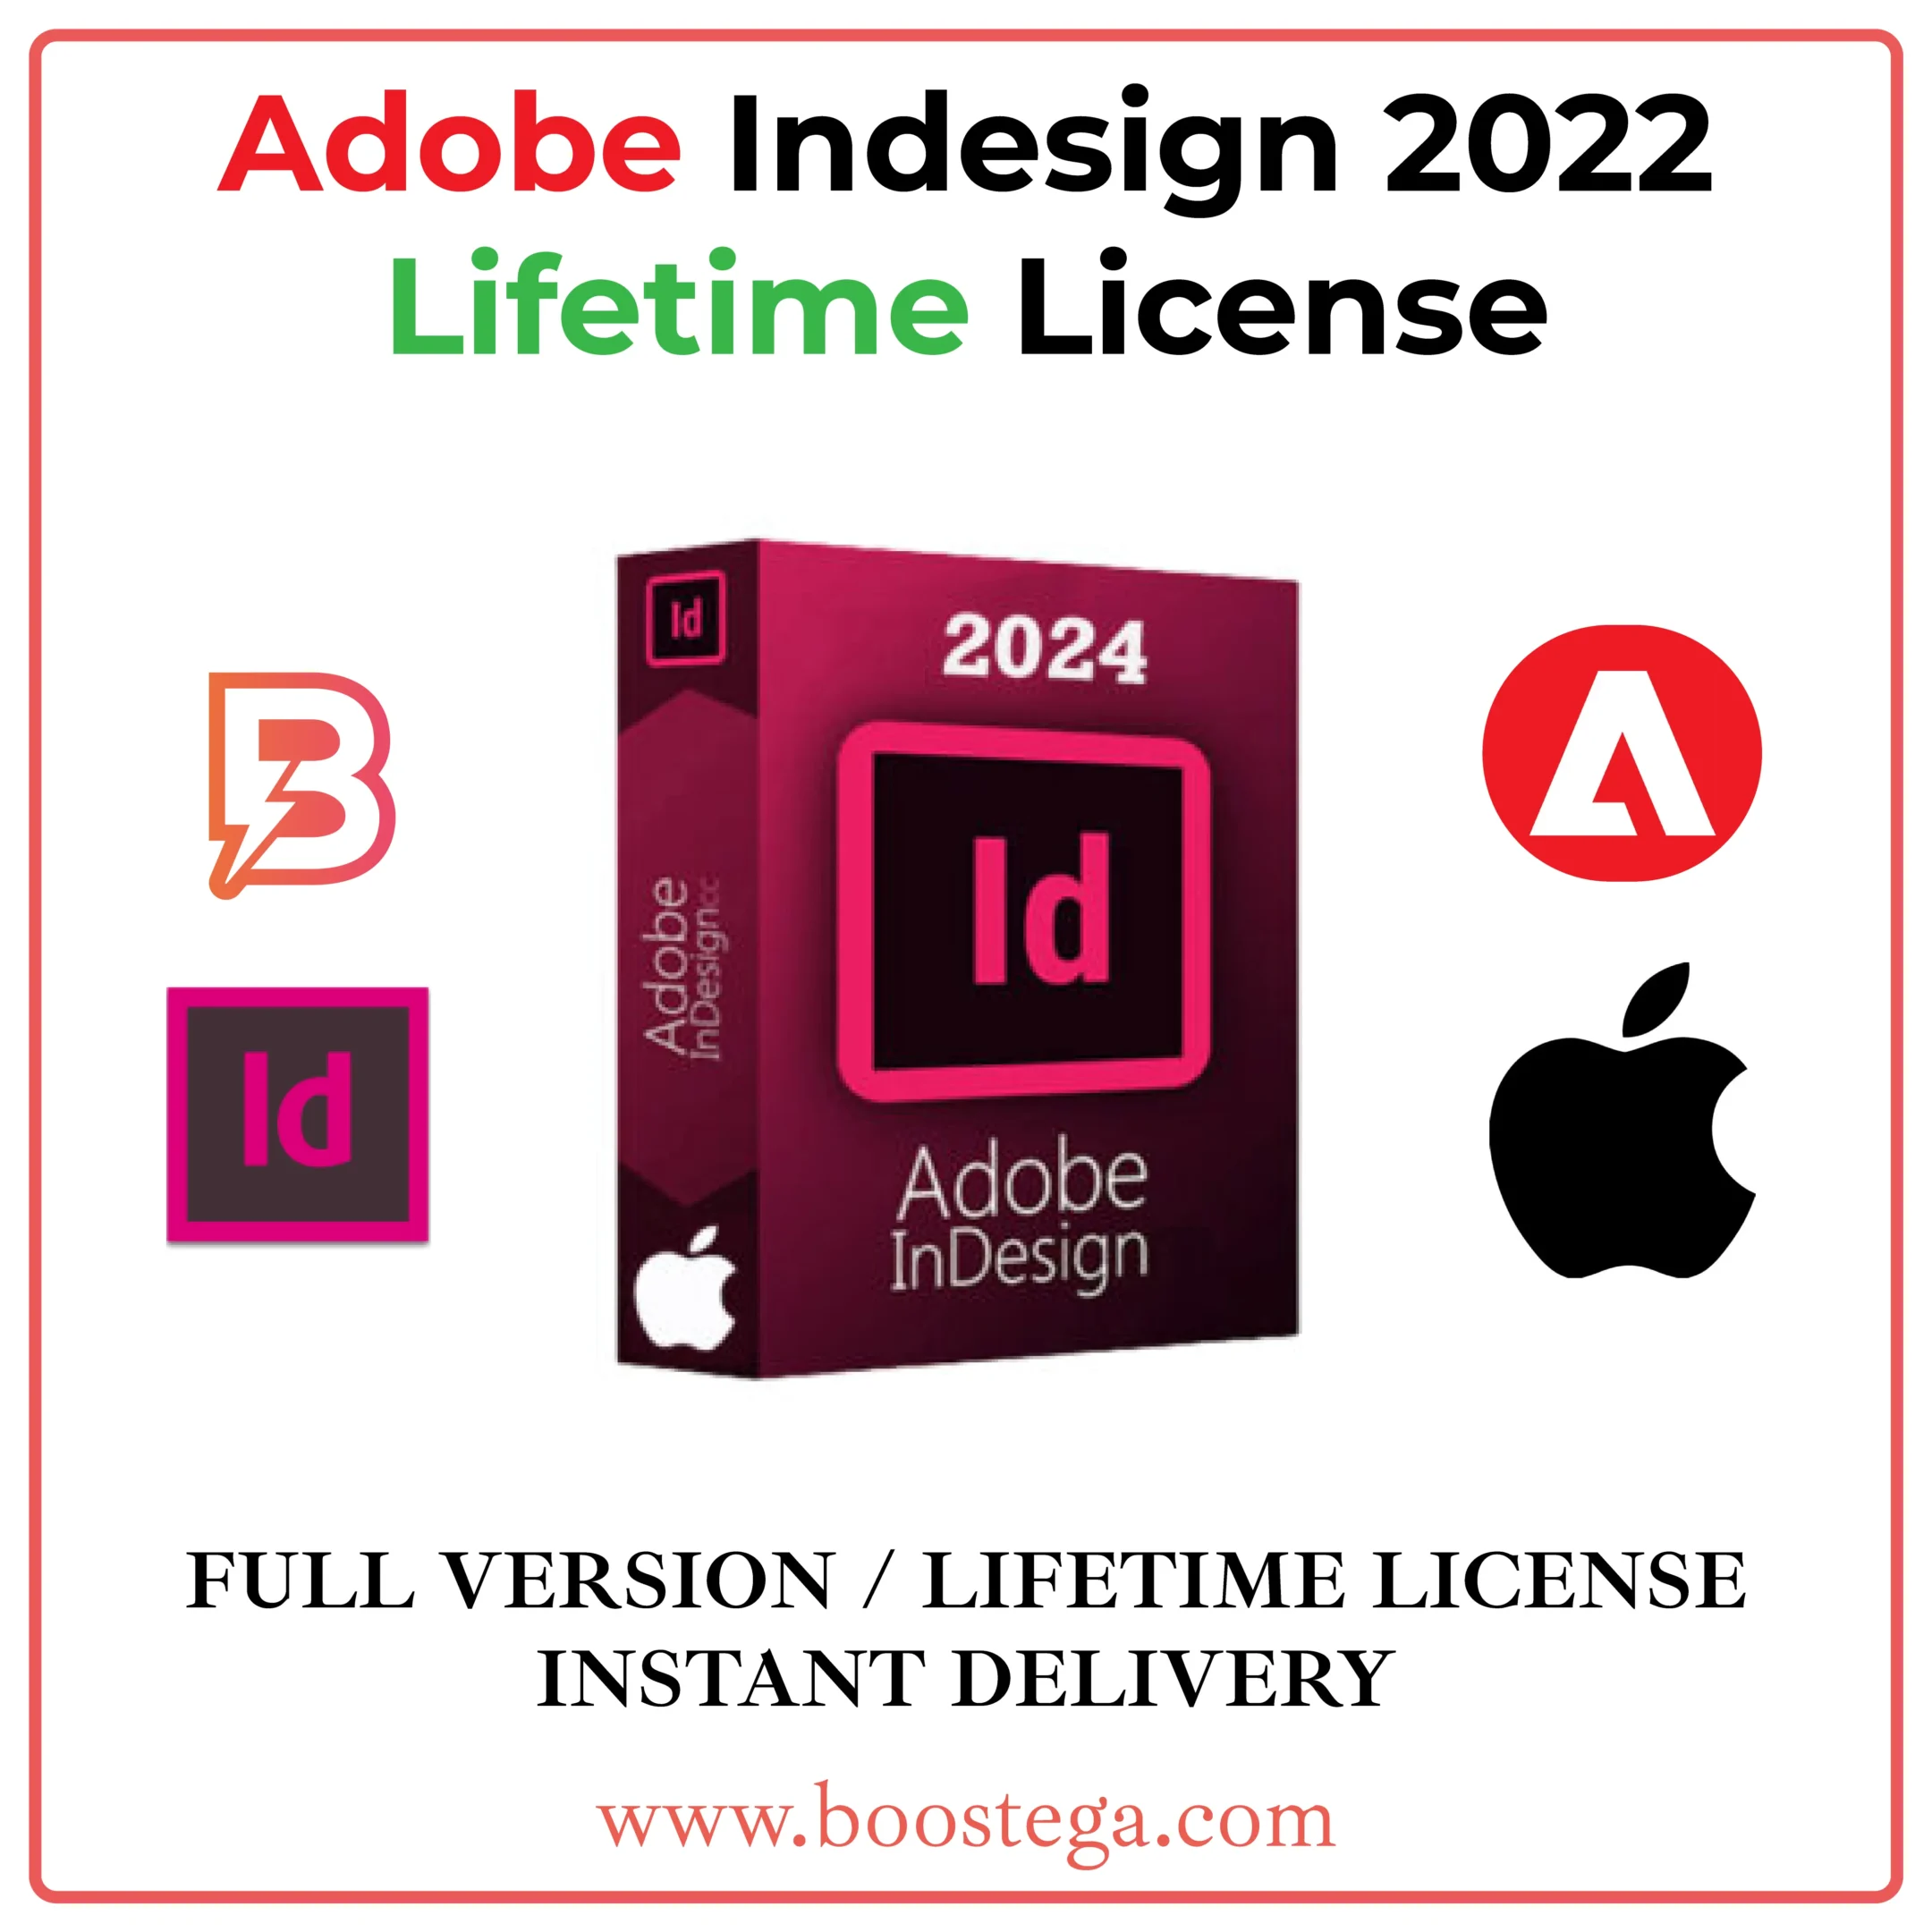 adobe indesign 2022 lifetime license for macos